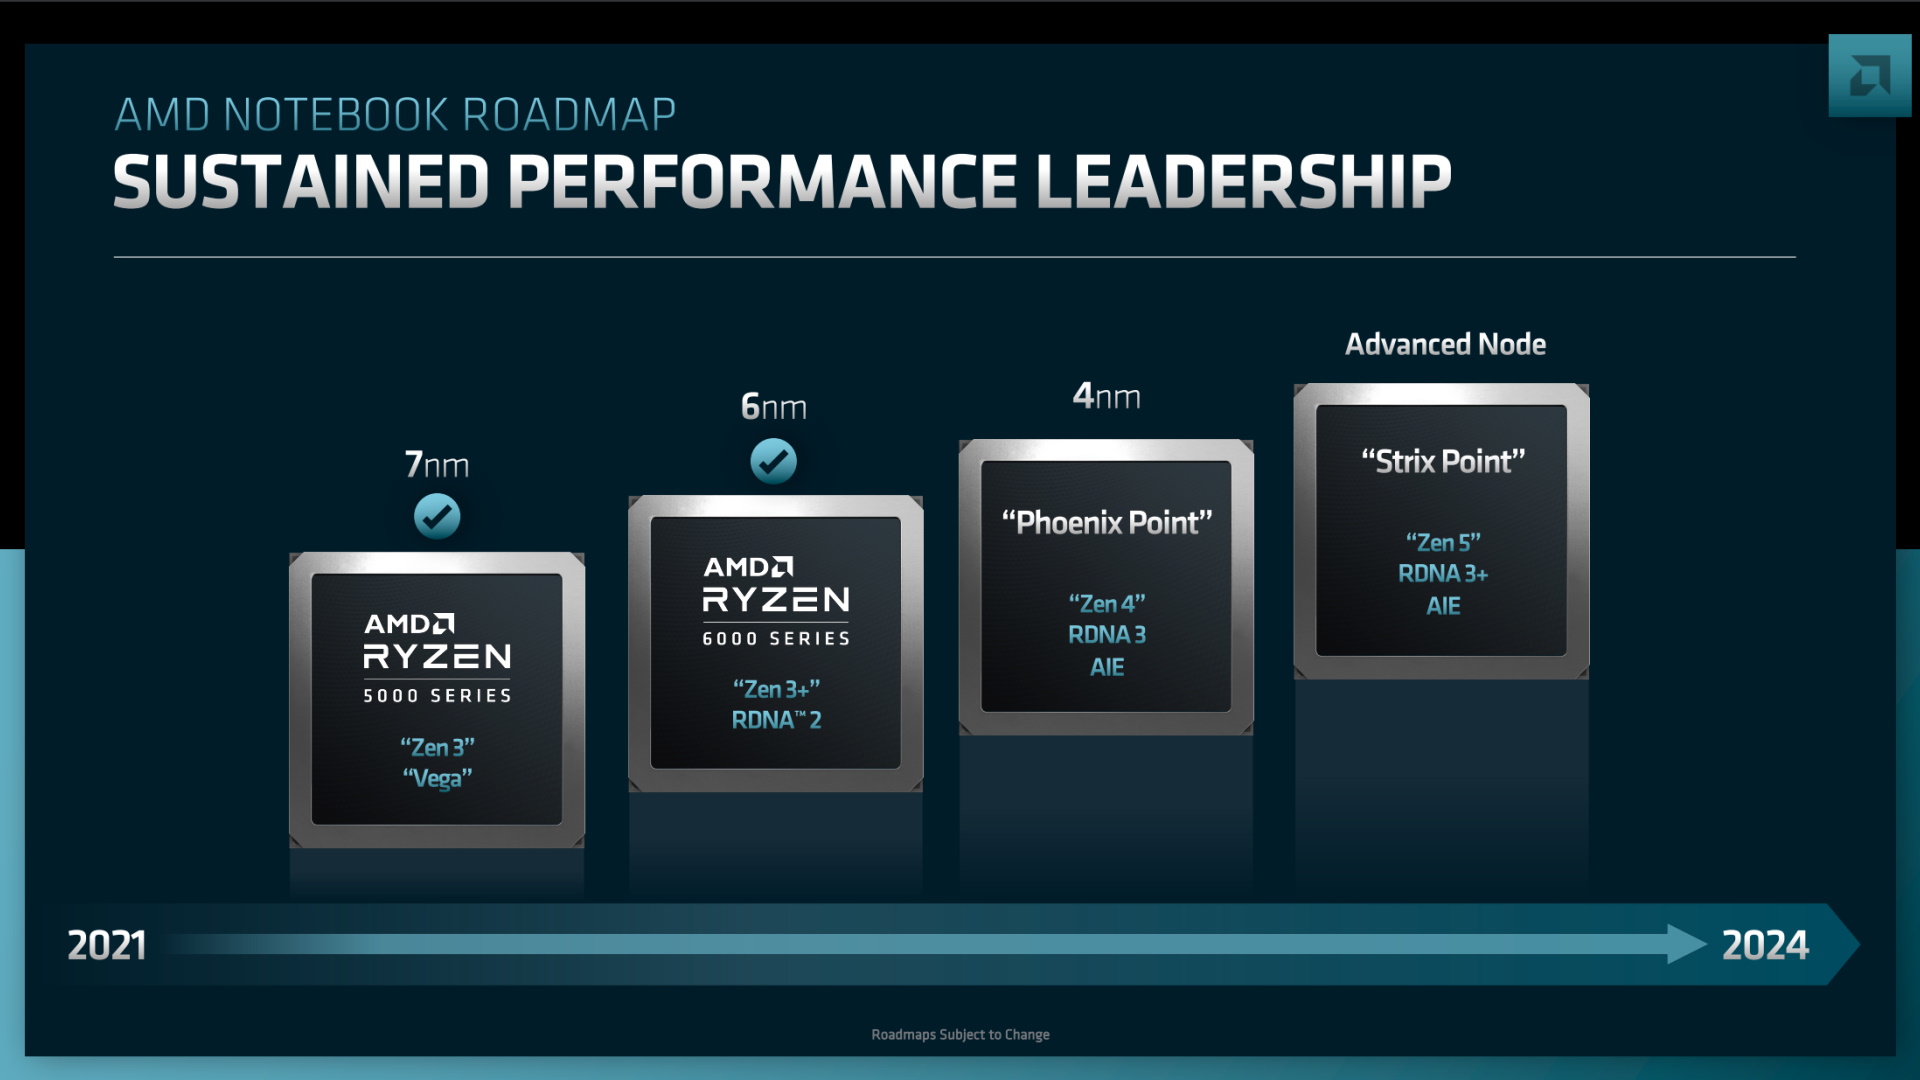 Slide from AMD FAD 2022 showing laptop plans.